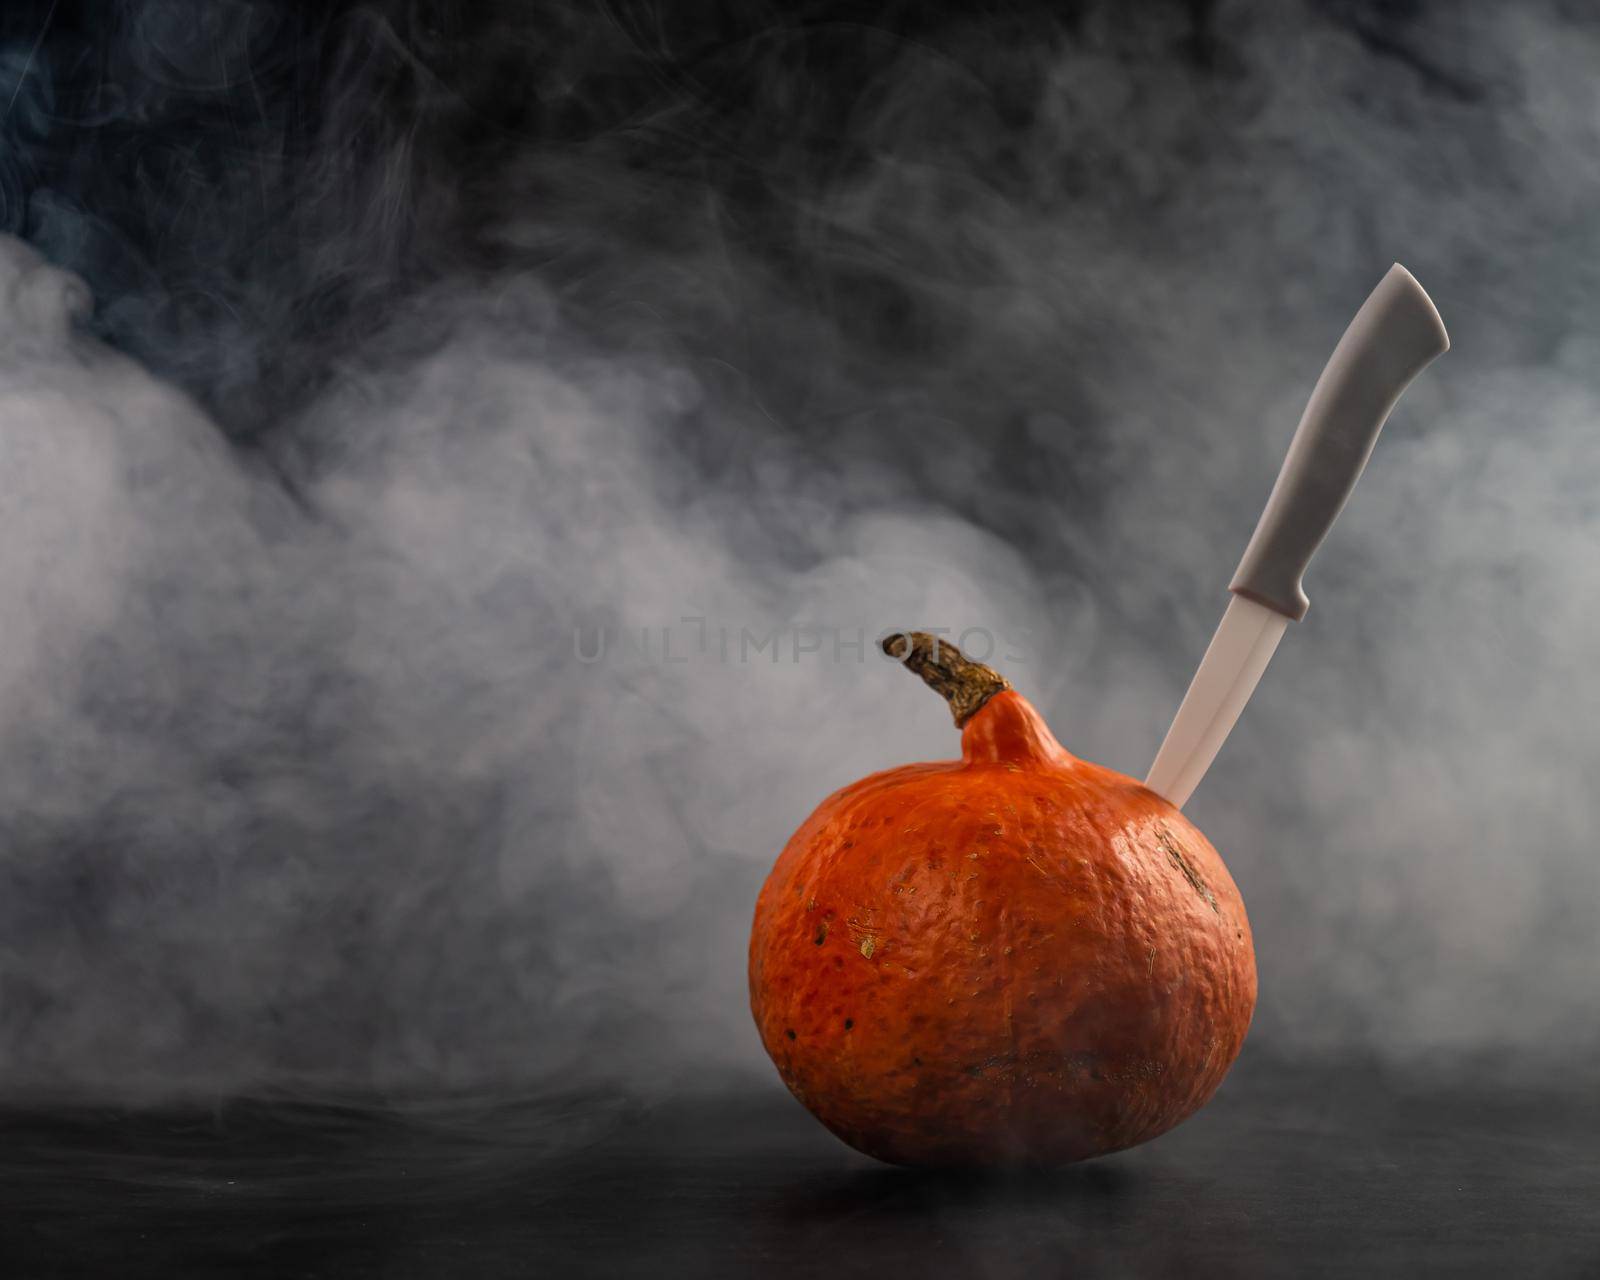 A knife in a pumpkin in the smoke. Happy Halloween. by mrwed54